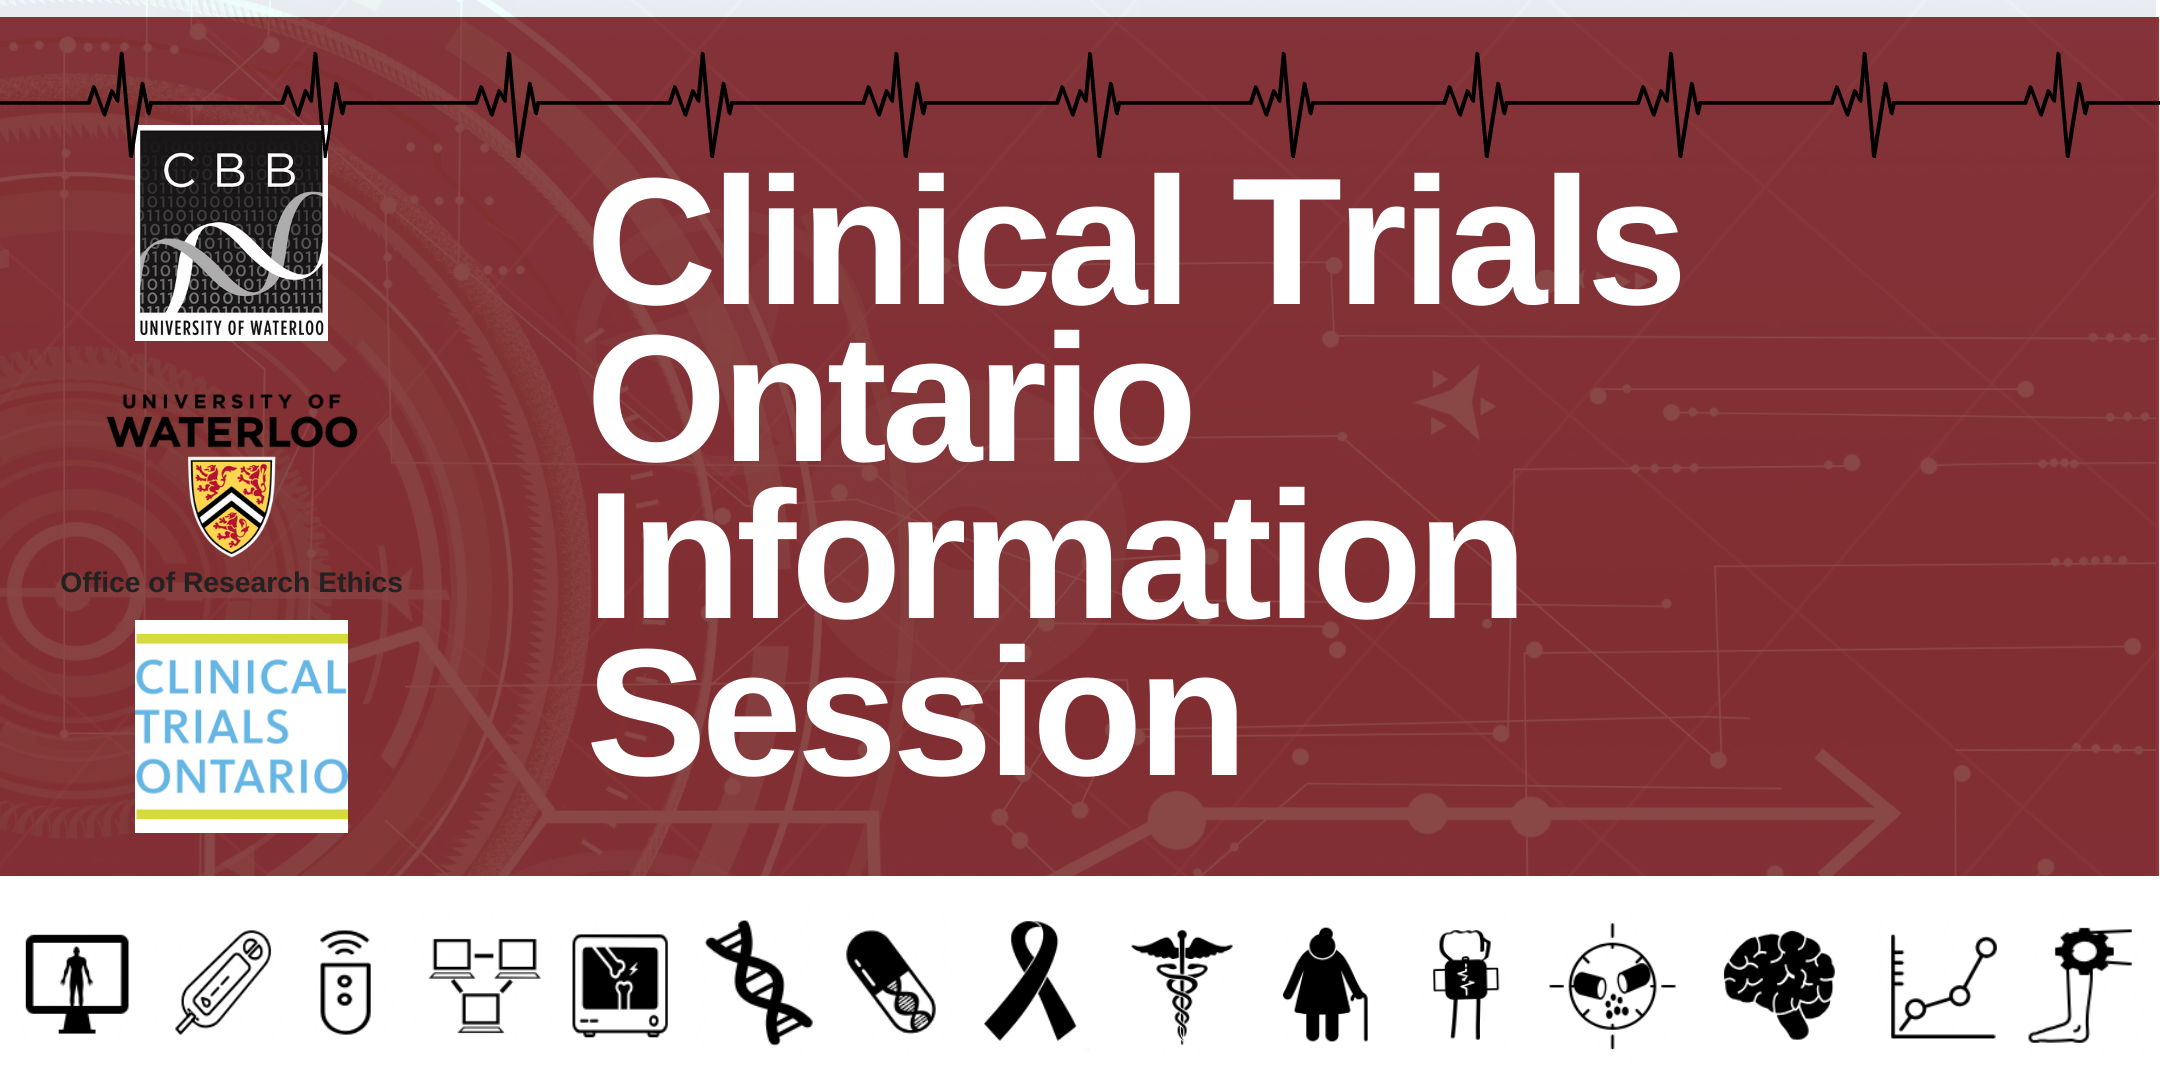 CBB Clinical trials Ontario poster